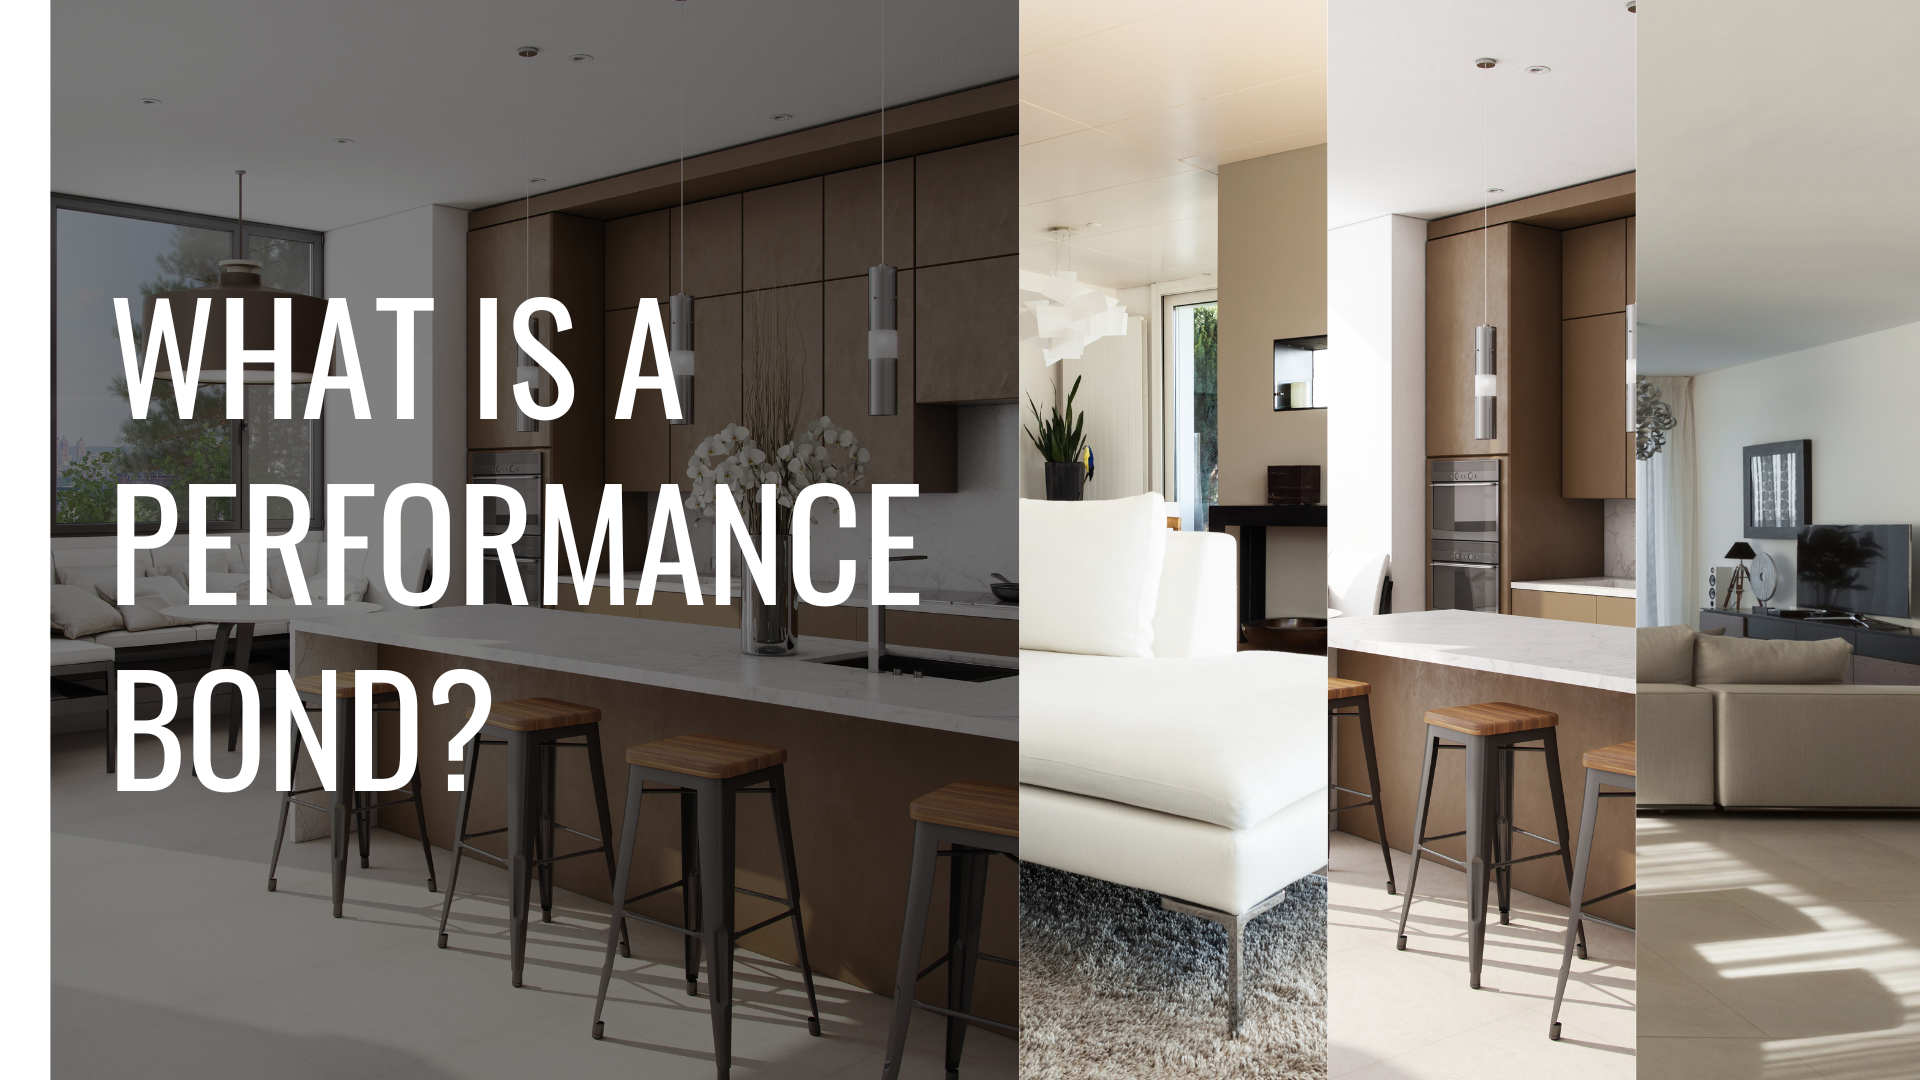 performance bond - What Is A Performance Bond? - modern interior